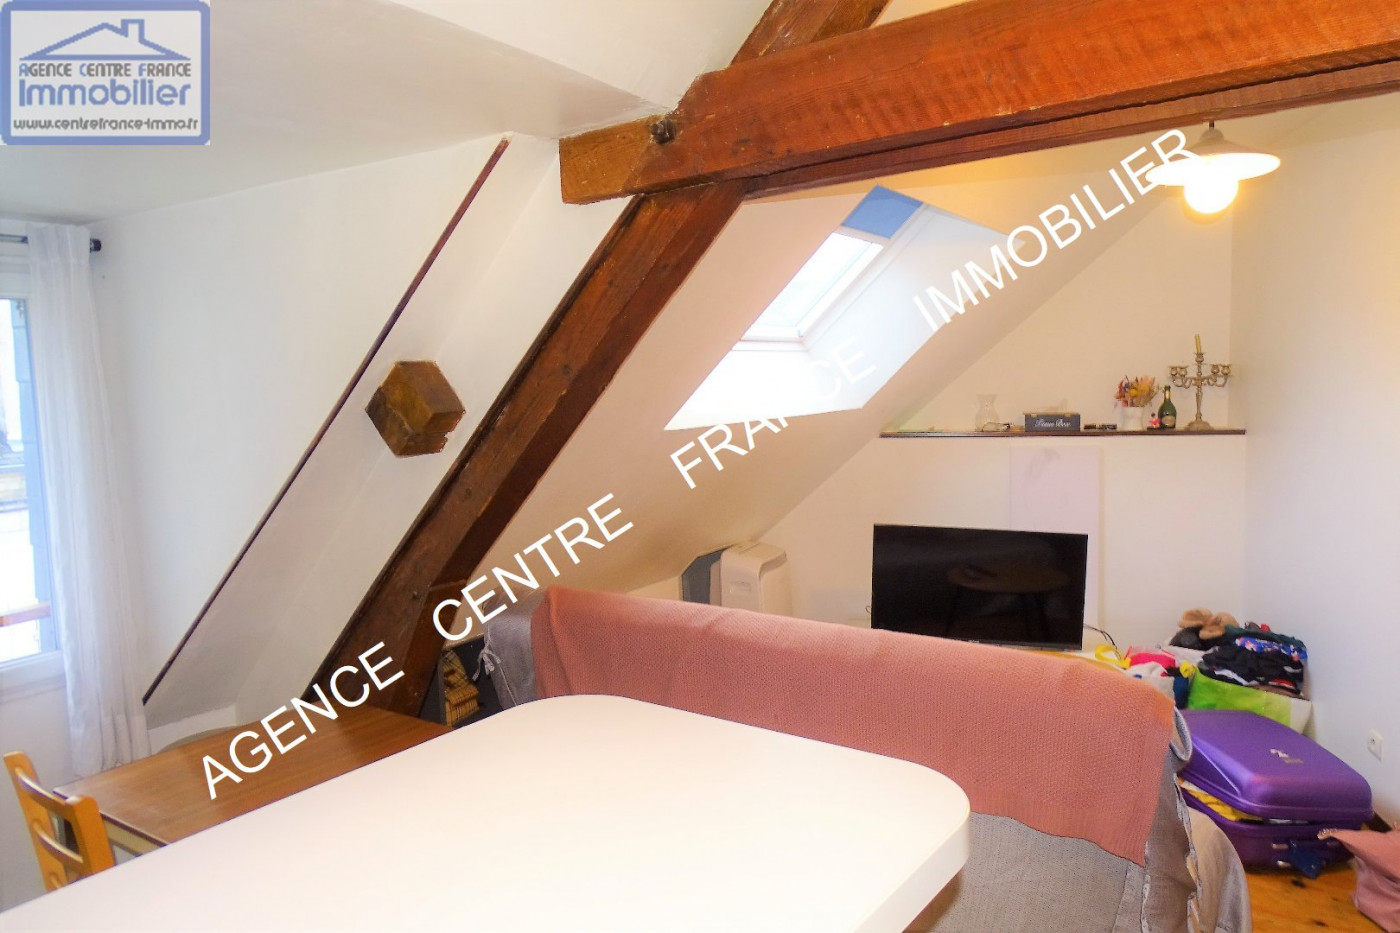 A vendre  Bourges | Réf 030011576 - Agence centre france immobilier